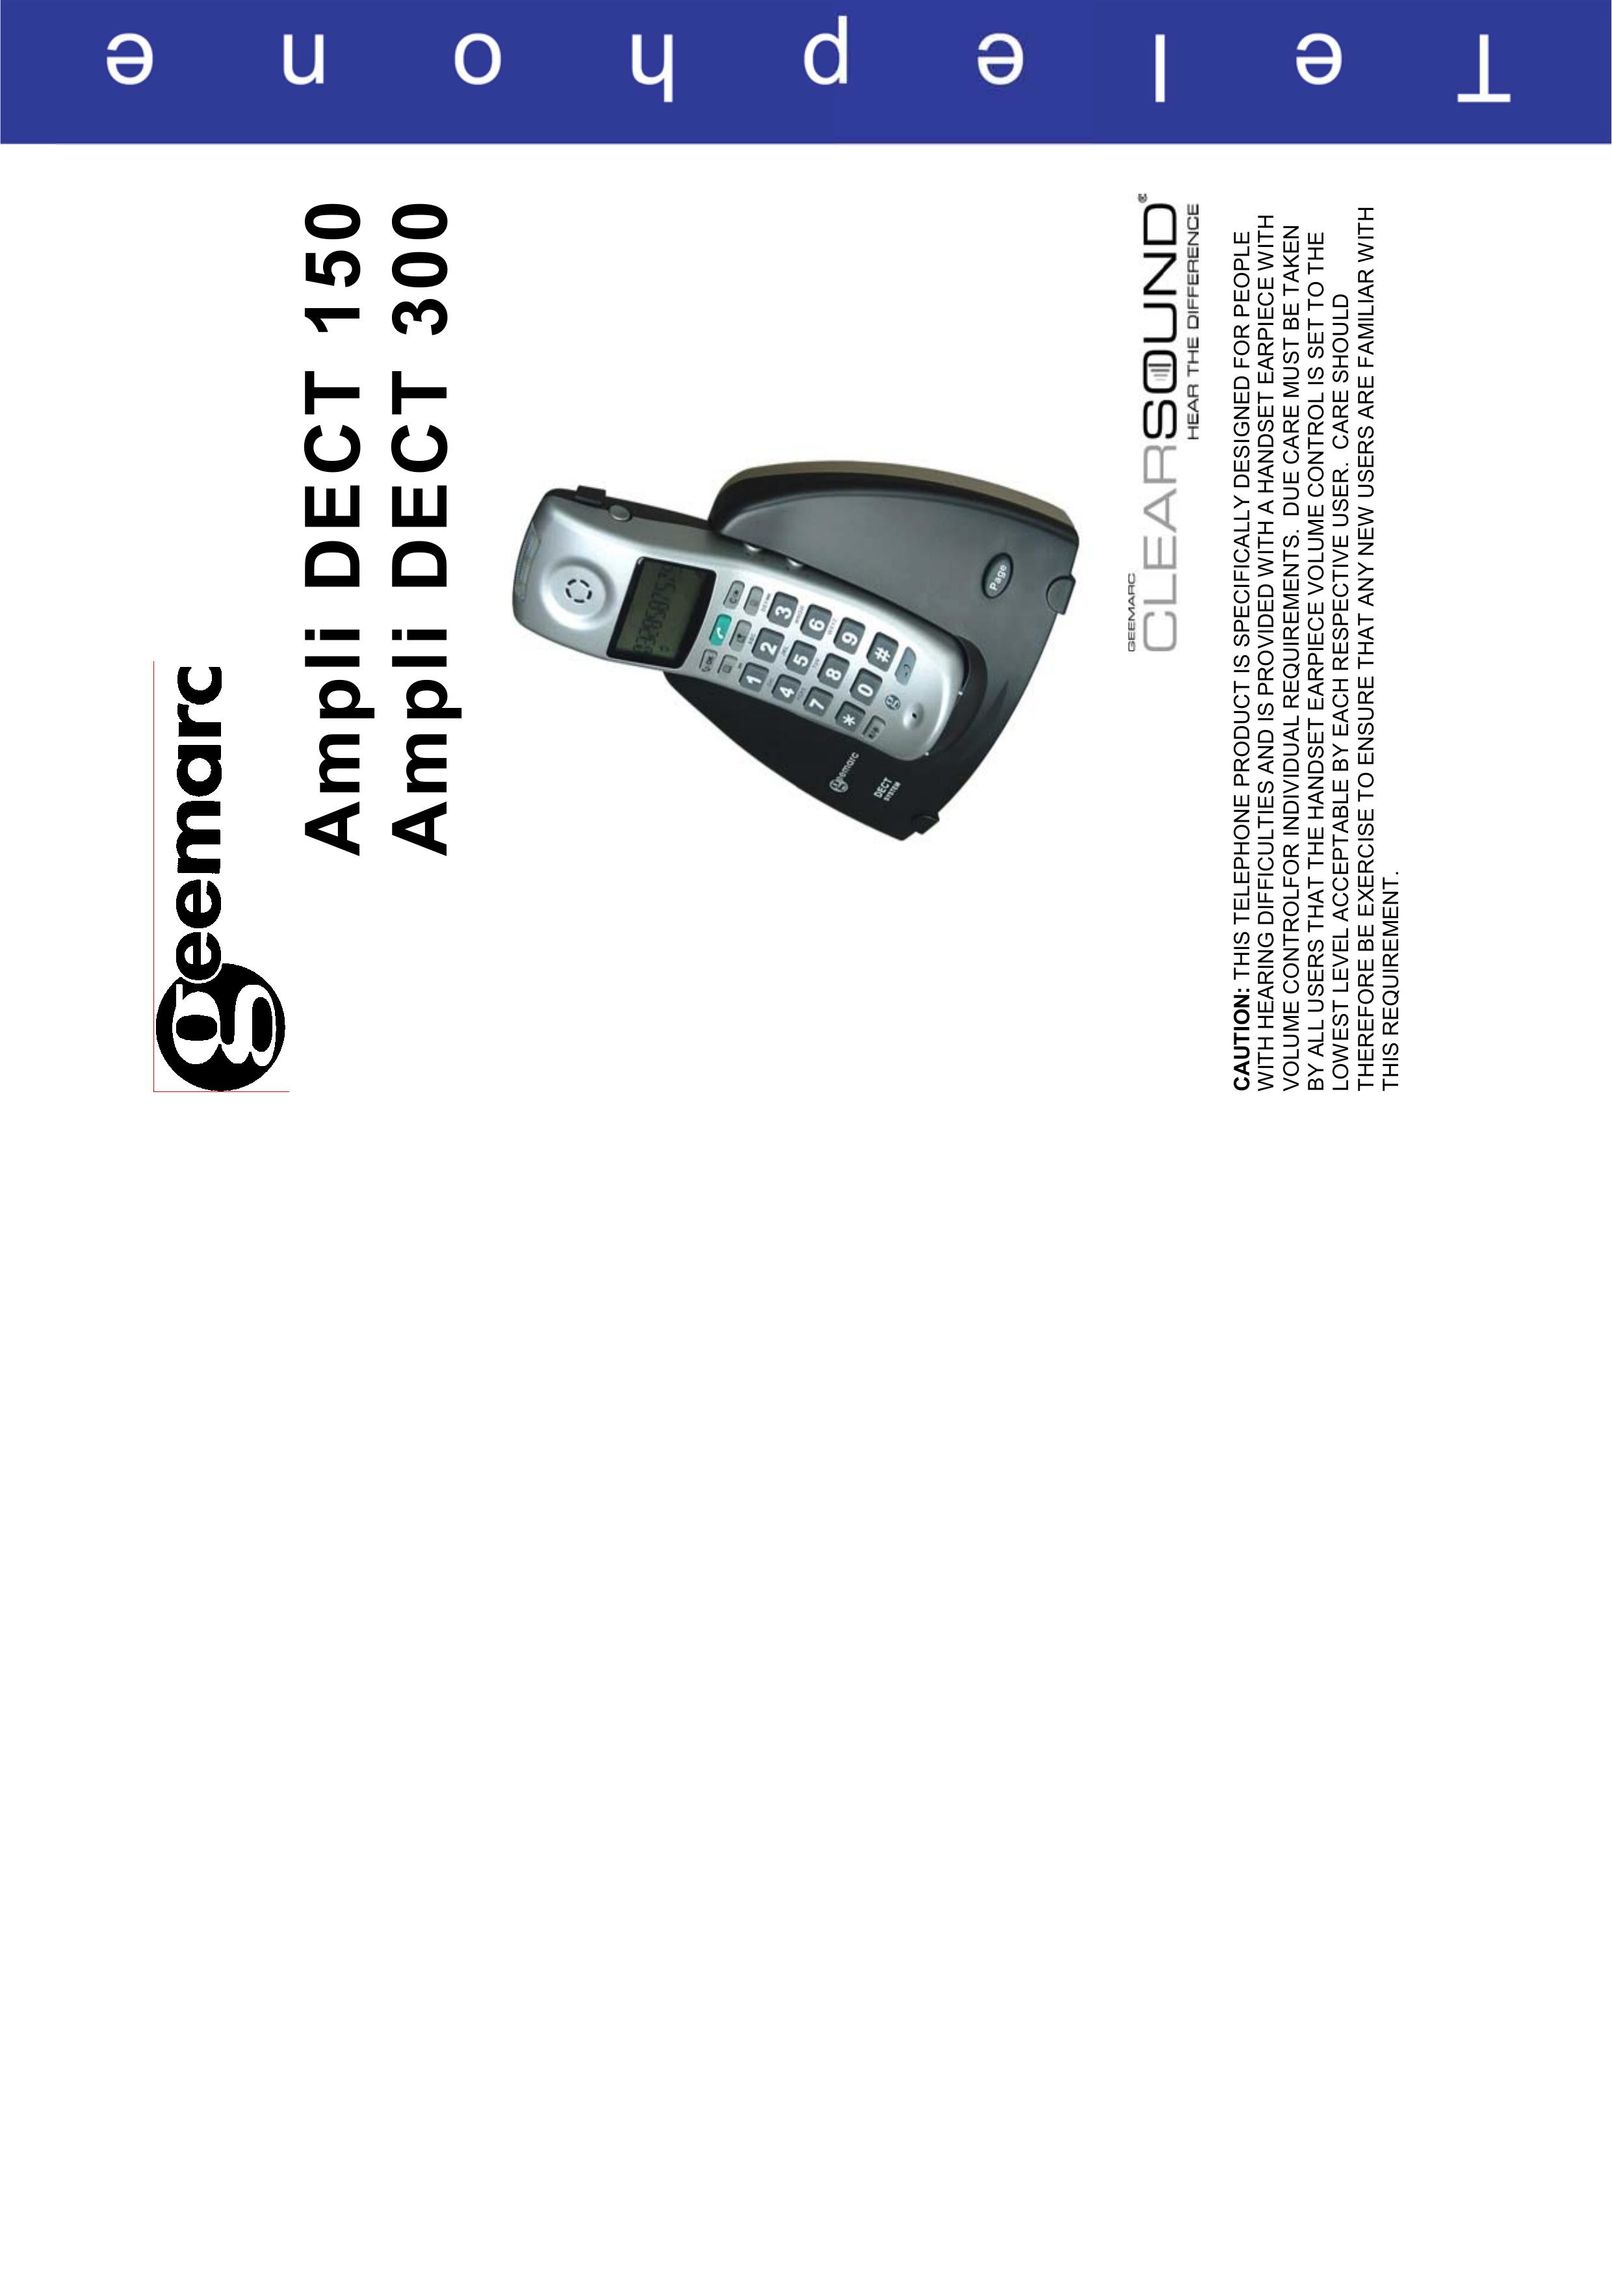 Geemarc Dect 300 Cordless Telephone User Manual